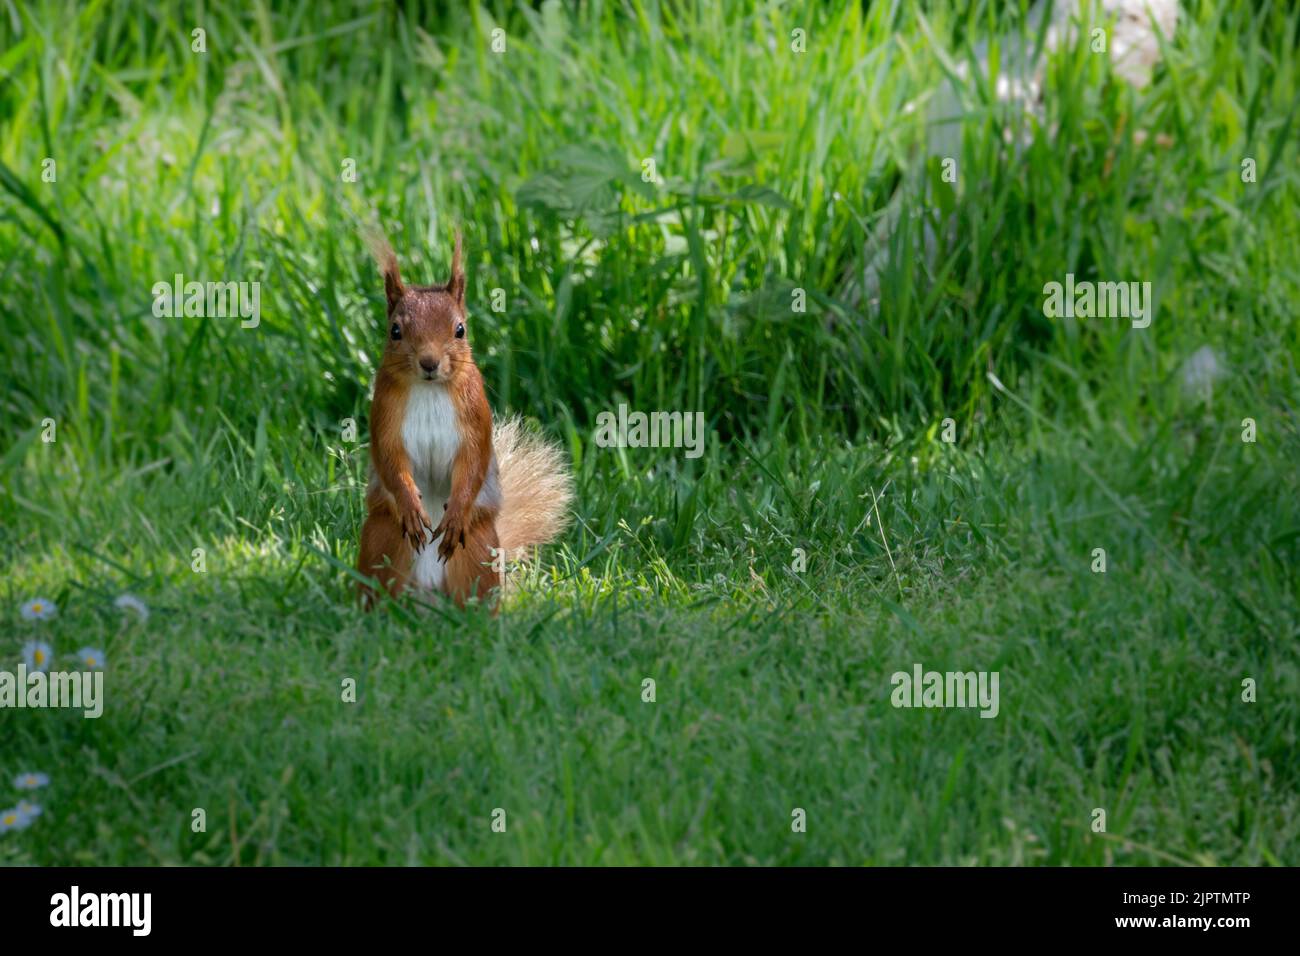 UK Wild Red Squirrel sur l'herbe regardant la caméra Banque D'Images